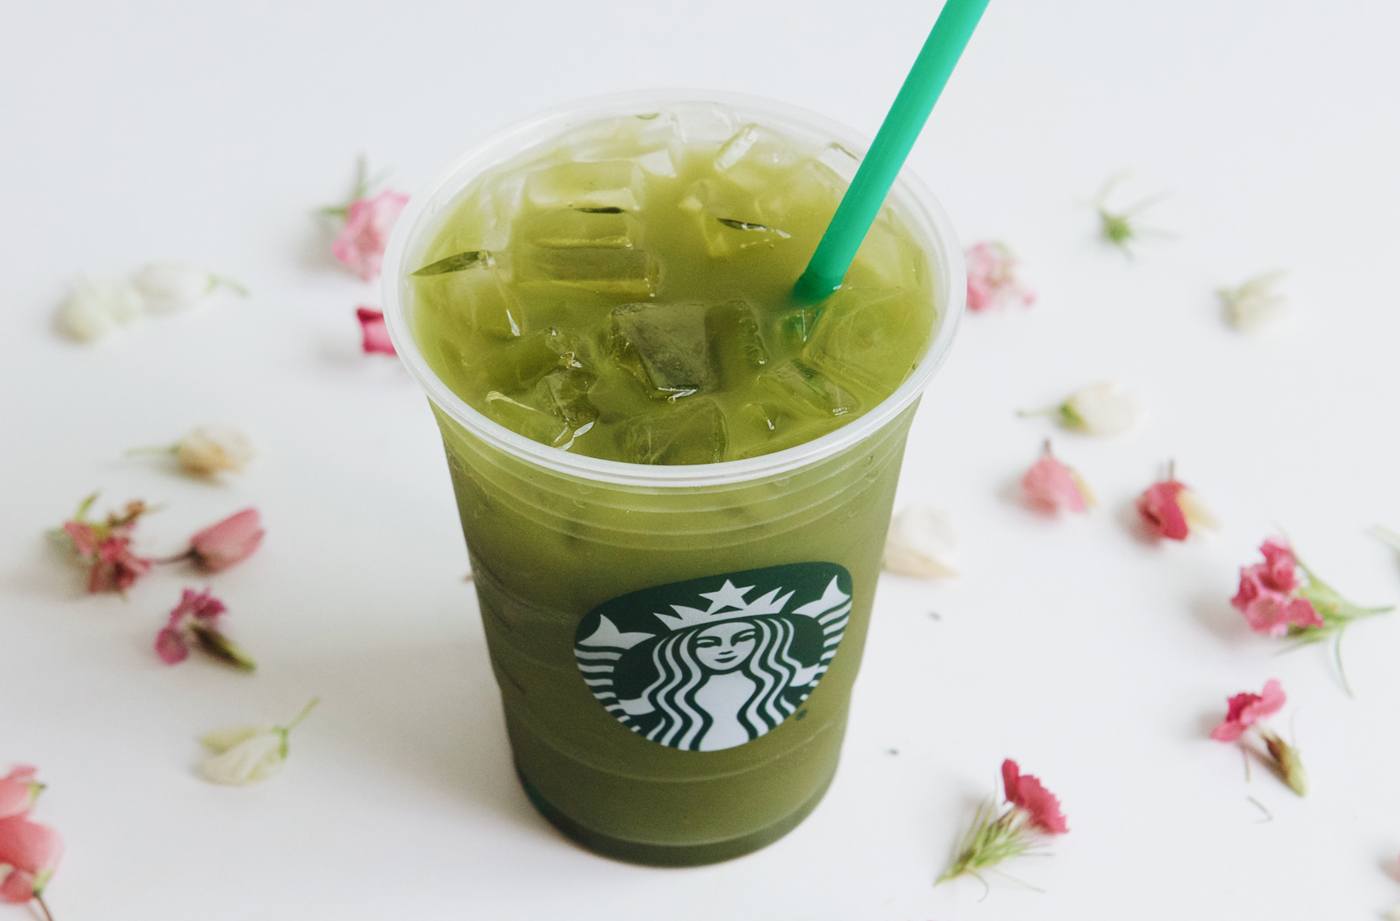 Is Starbucks Green Tea Healthy